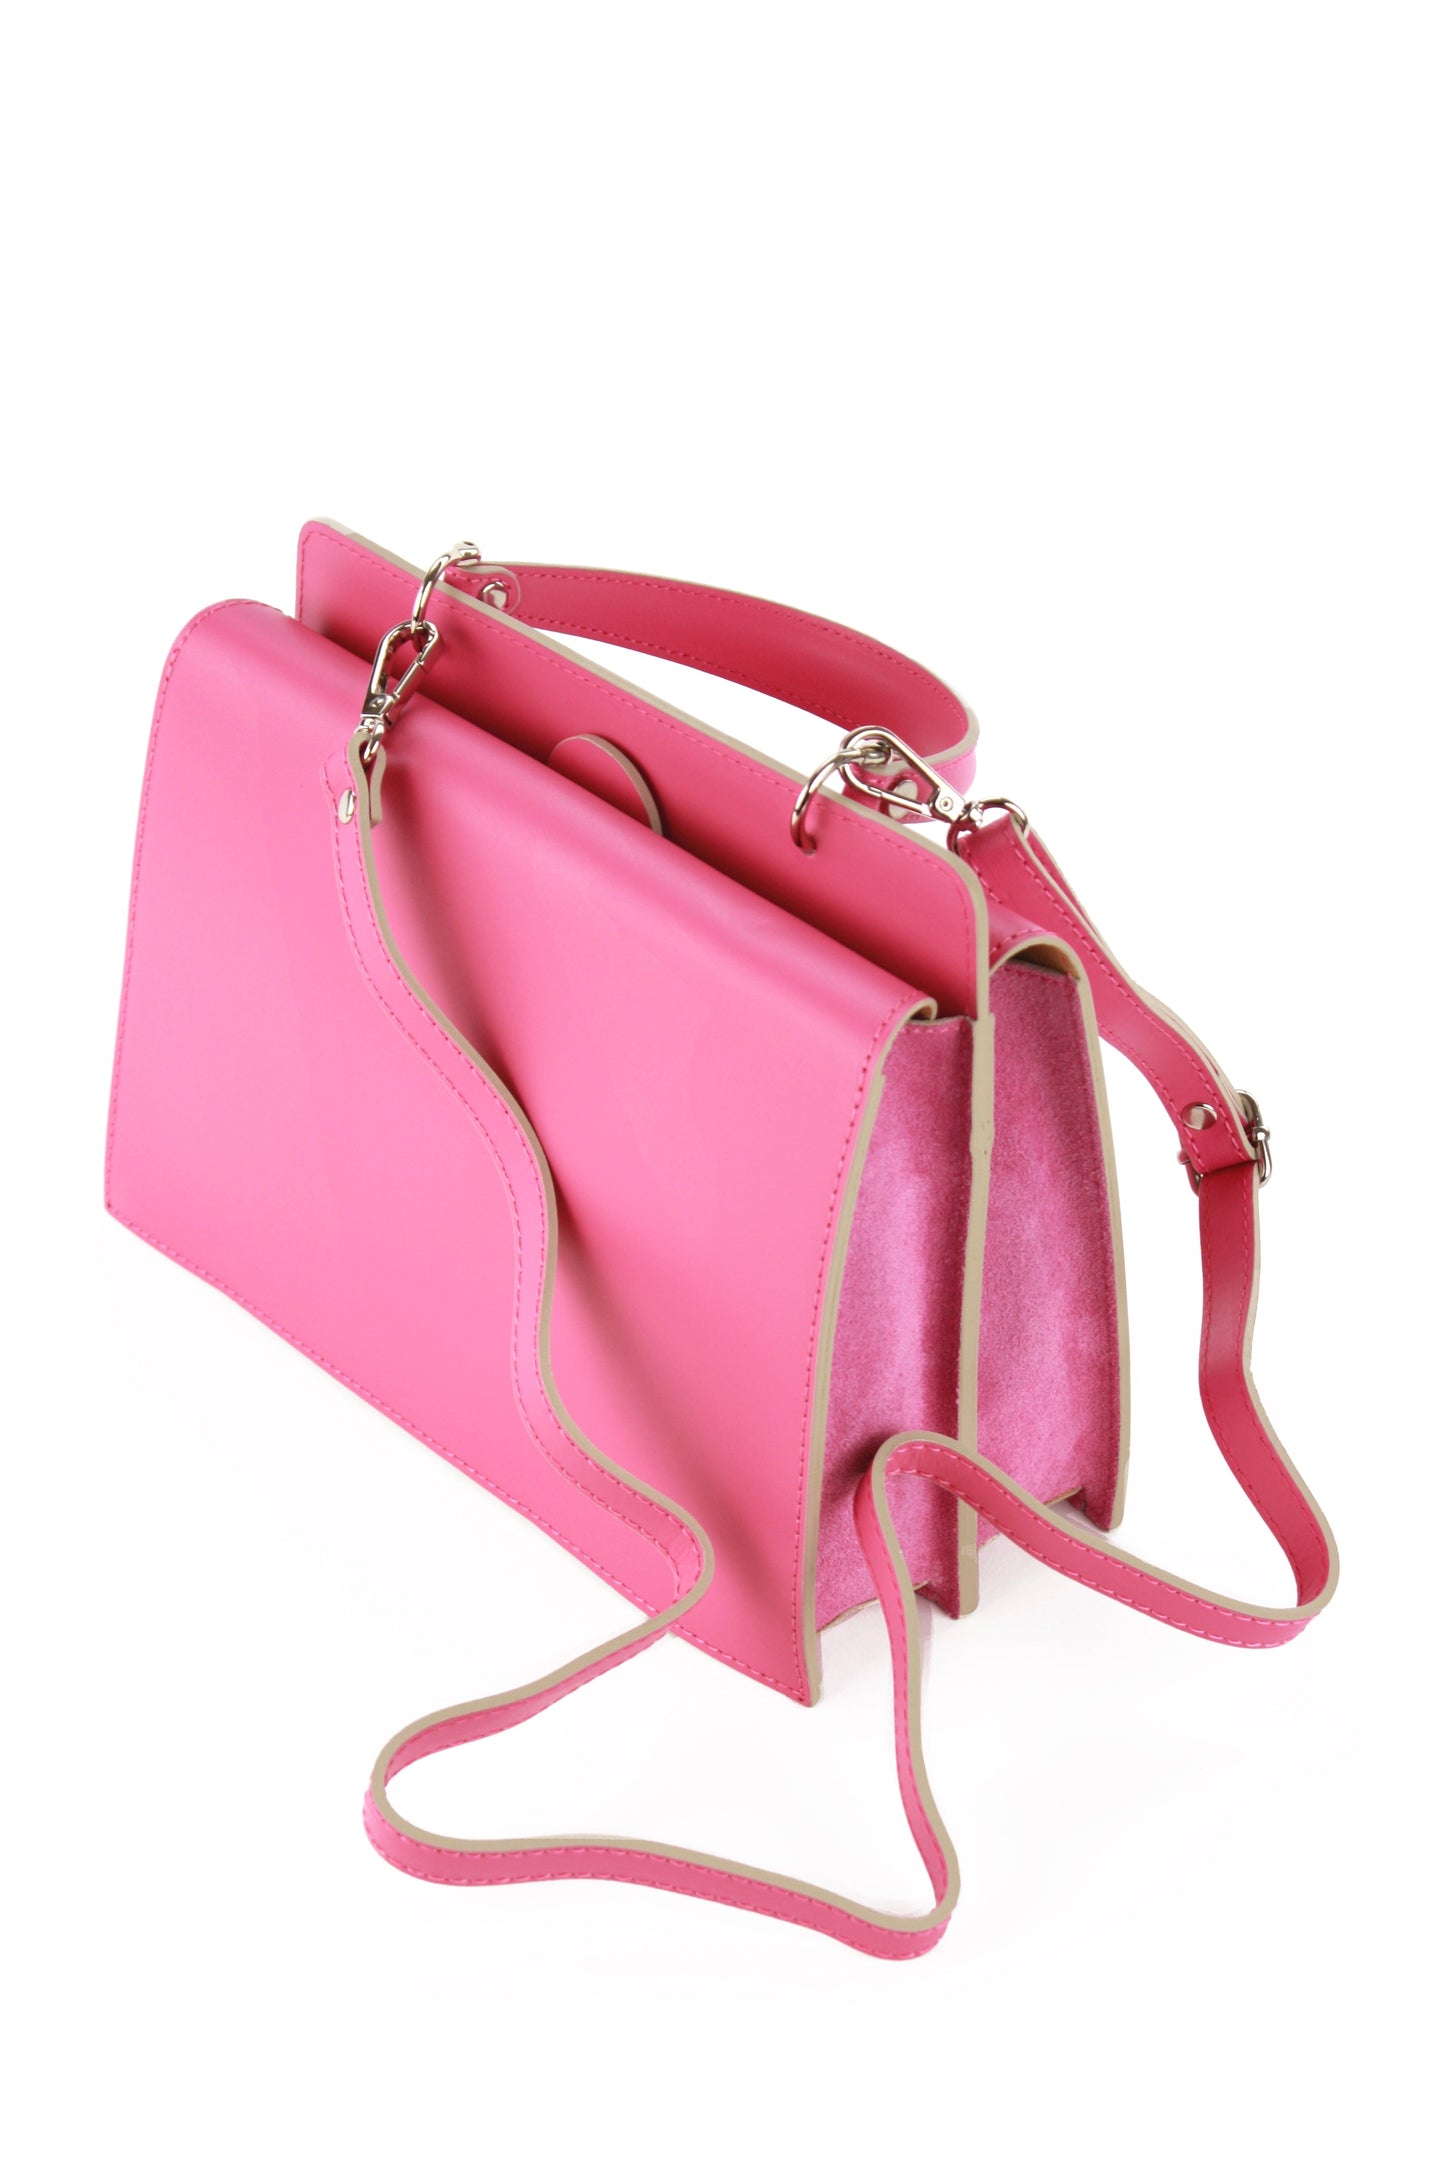 Zama handbag in pink